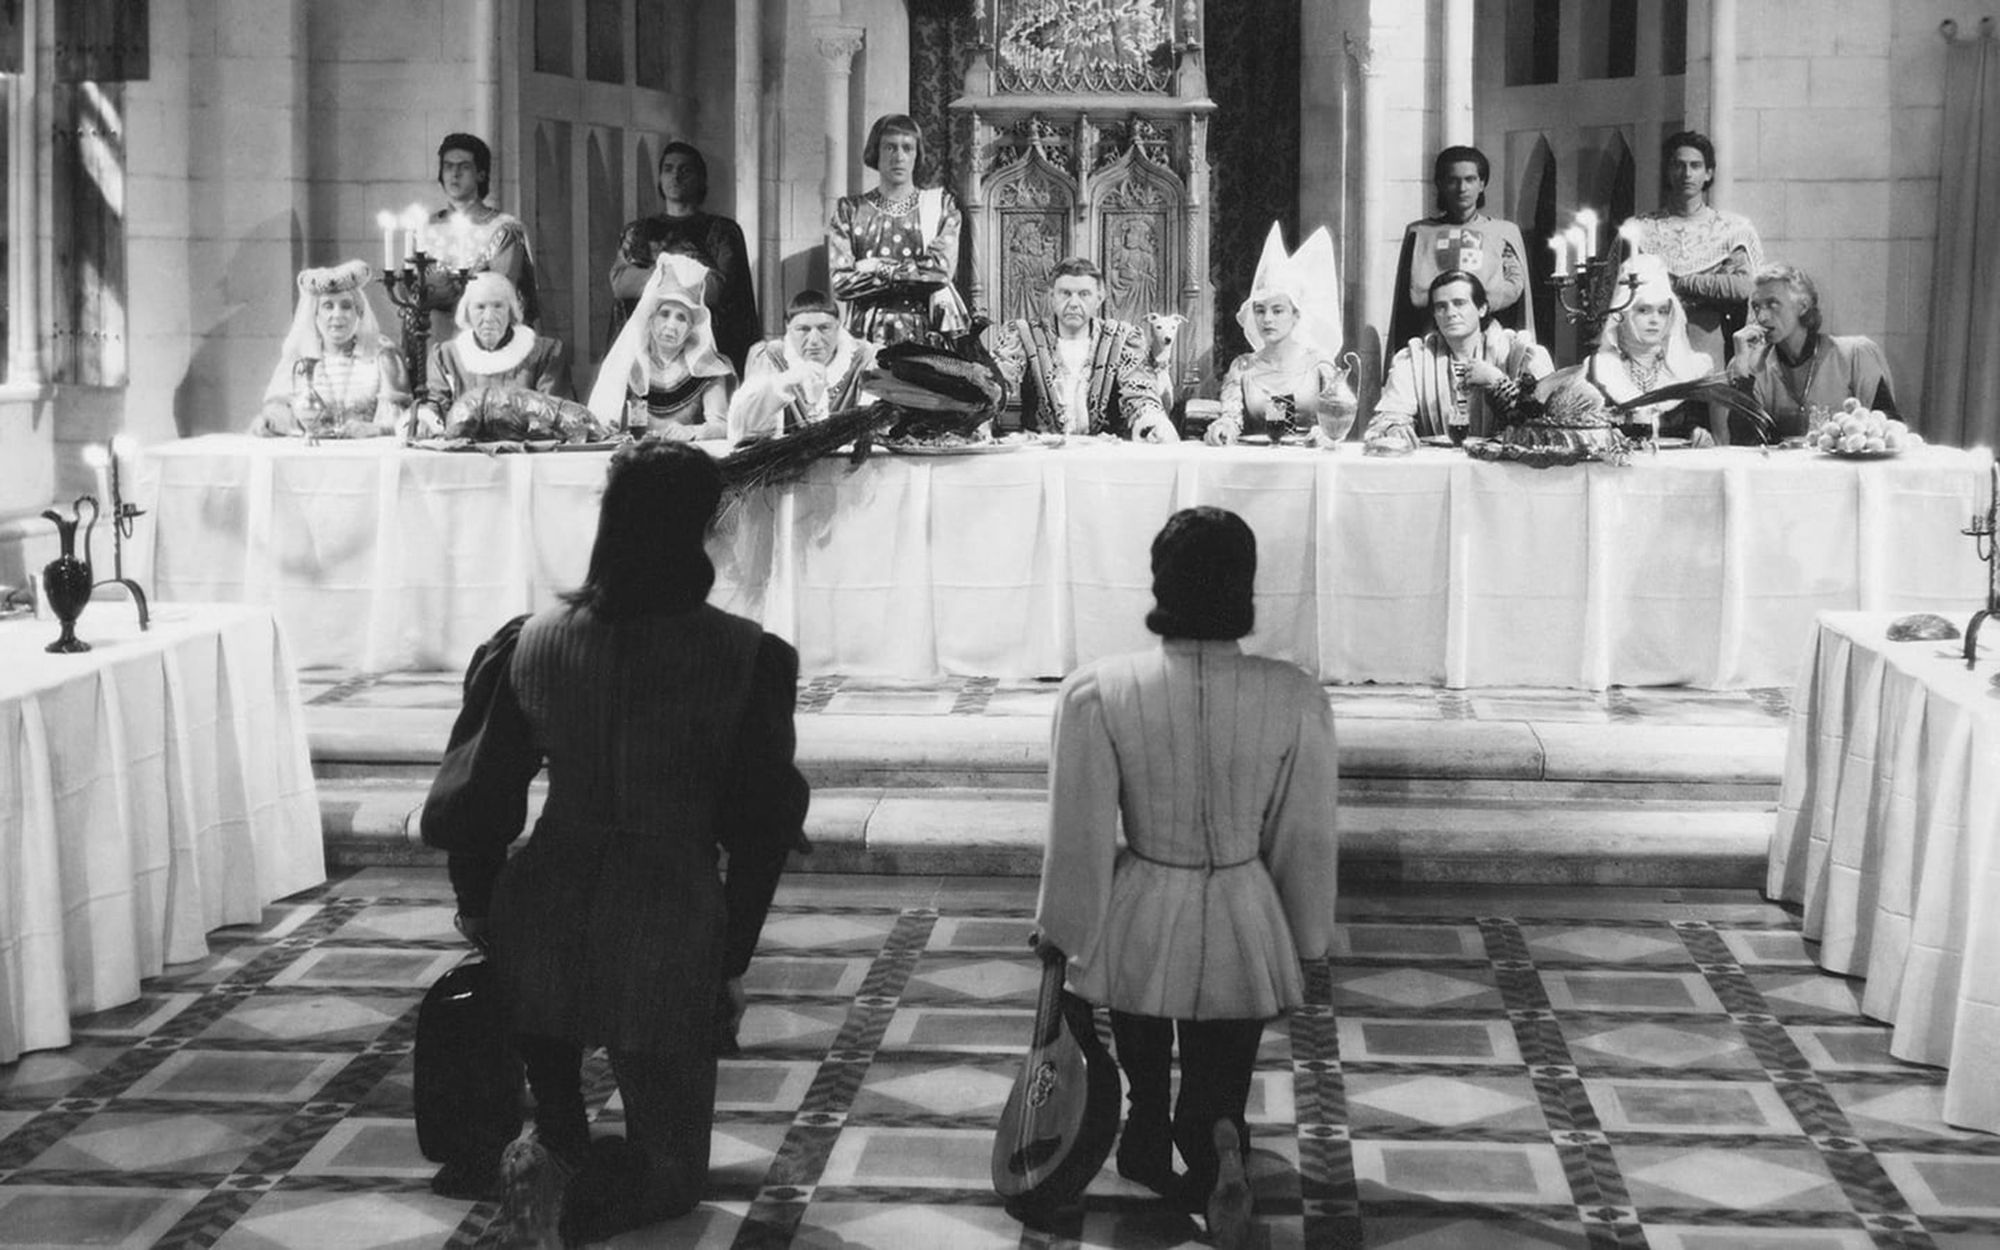 Два менестреля склонили колено перед столом, за которым сидят представители аристократии